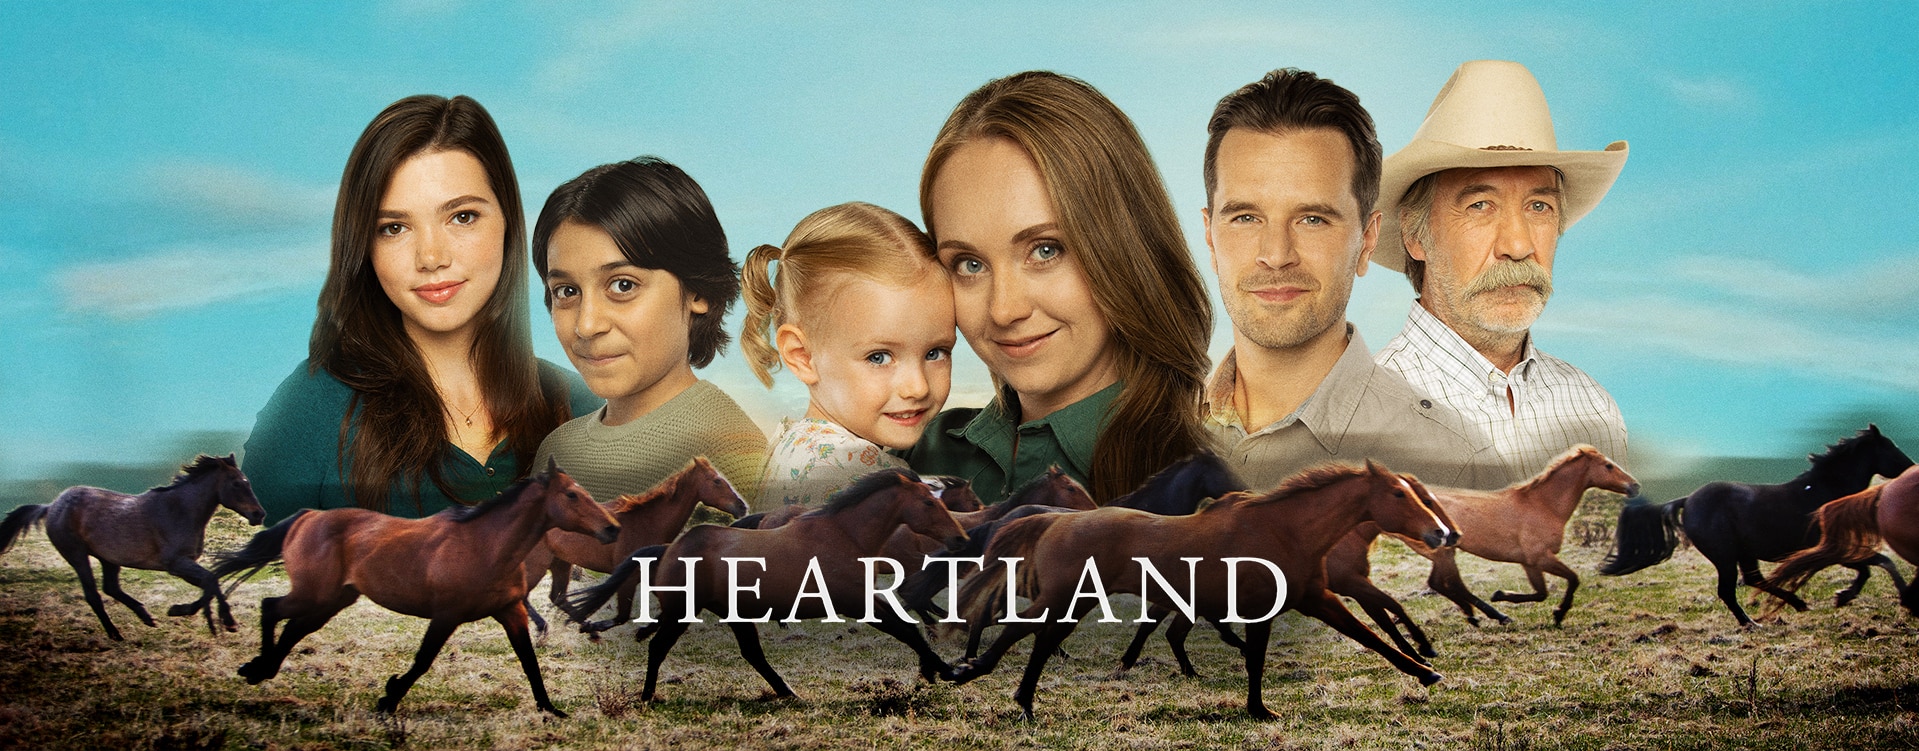 heartland season 14 episode 1 on up faith and family